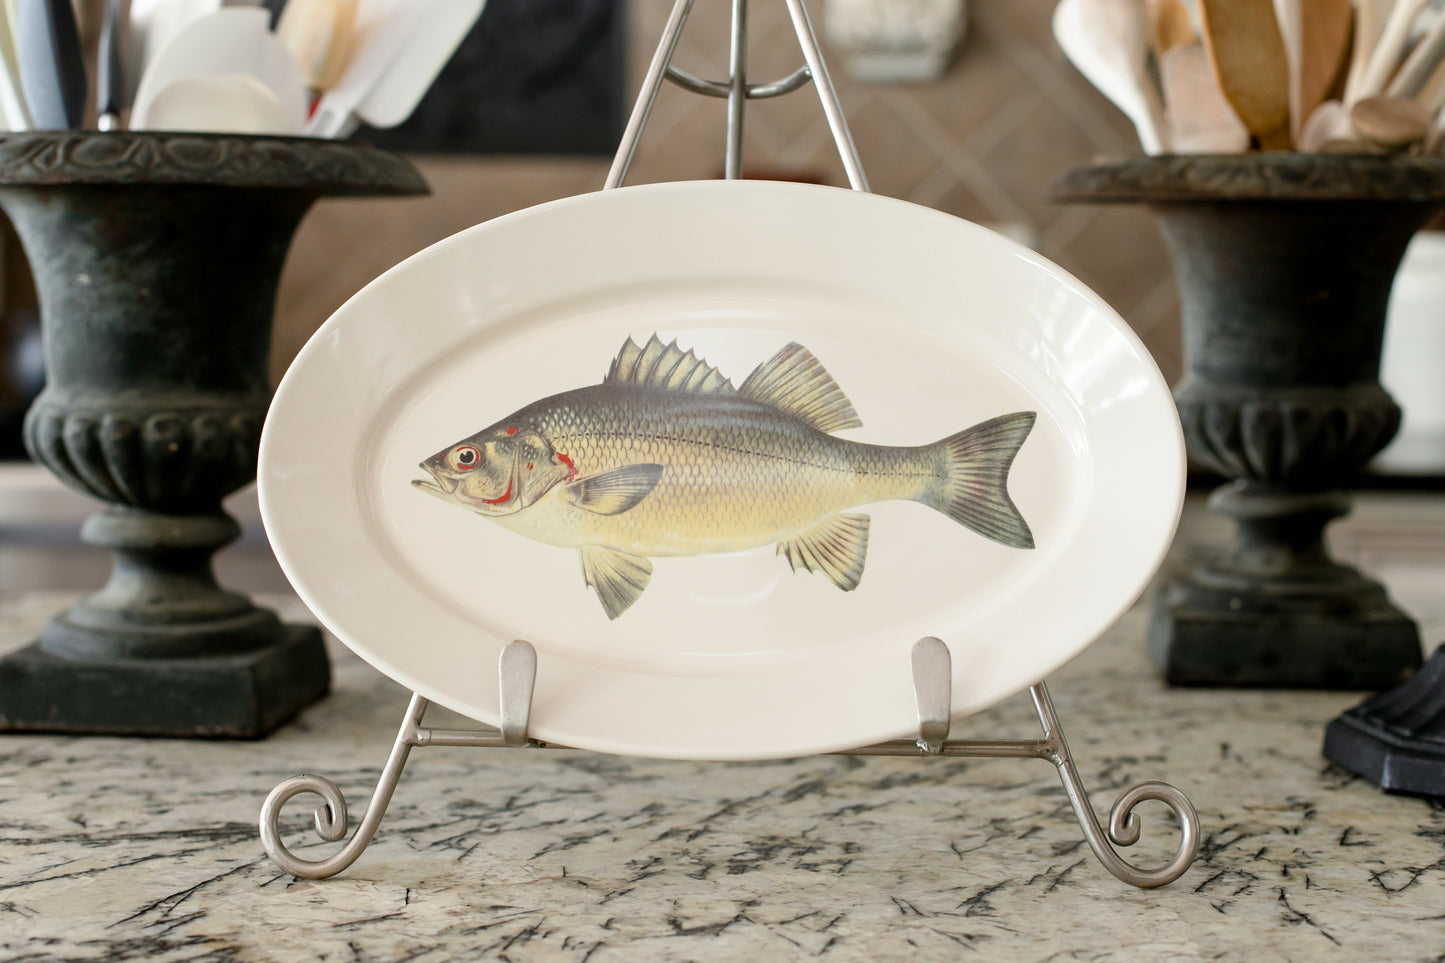 Striped Bass Fish Platter